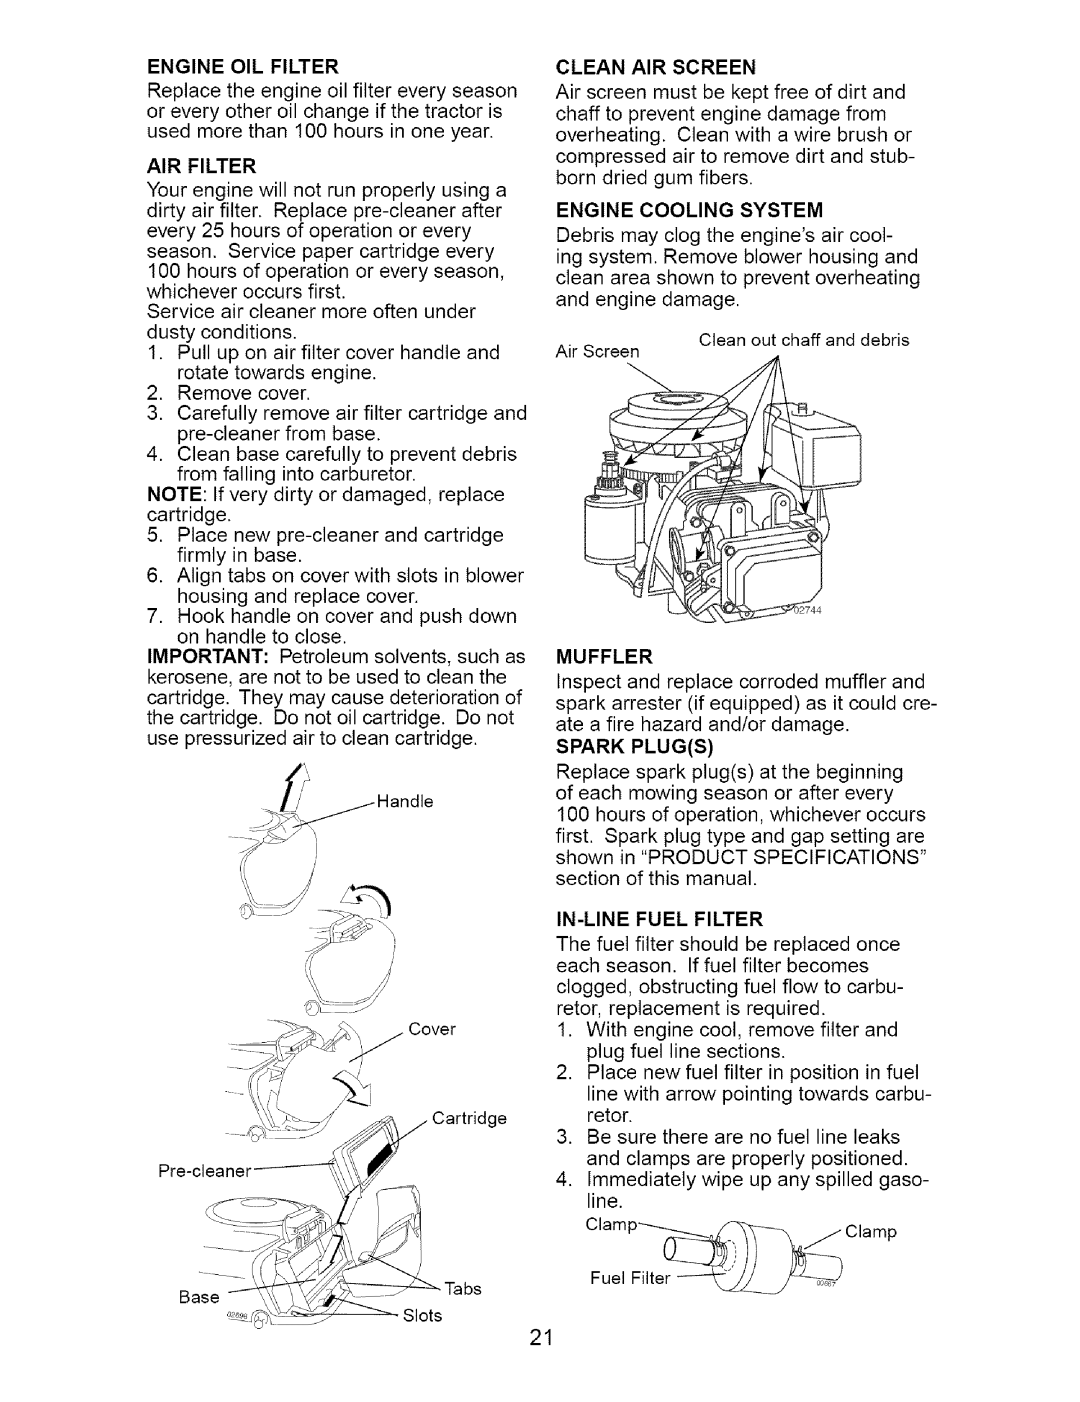 Craftsman 917.273648 manual Engine Oil Filter, Air Filter, Engine Cooling System, Muffler, Spark Plugs, In-Linefuel Filter 